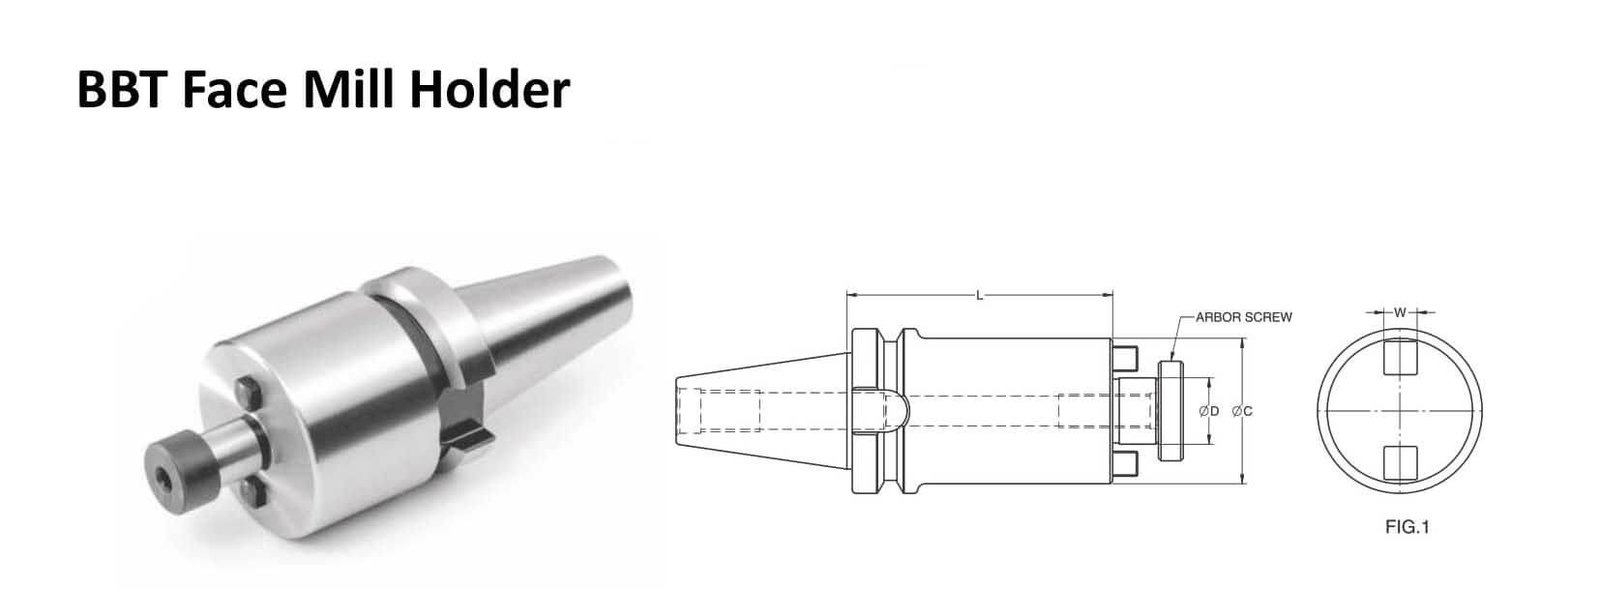 BBT30 FMH 1.000 - 2.00 Face Mill Holder (Balanced to 2.5G 25000 RPM)